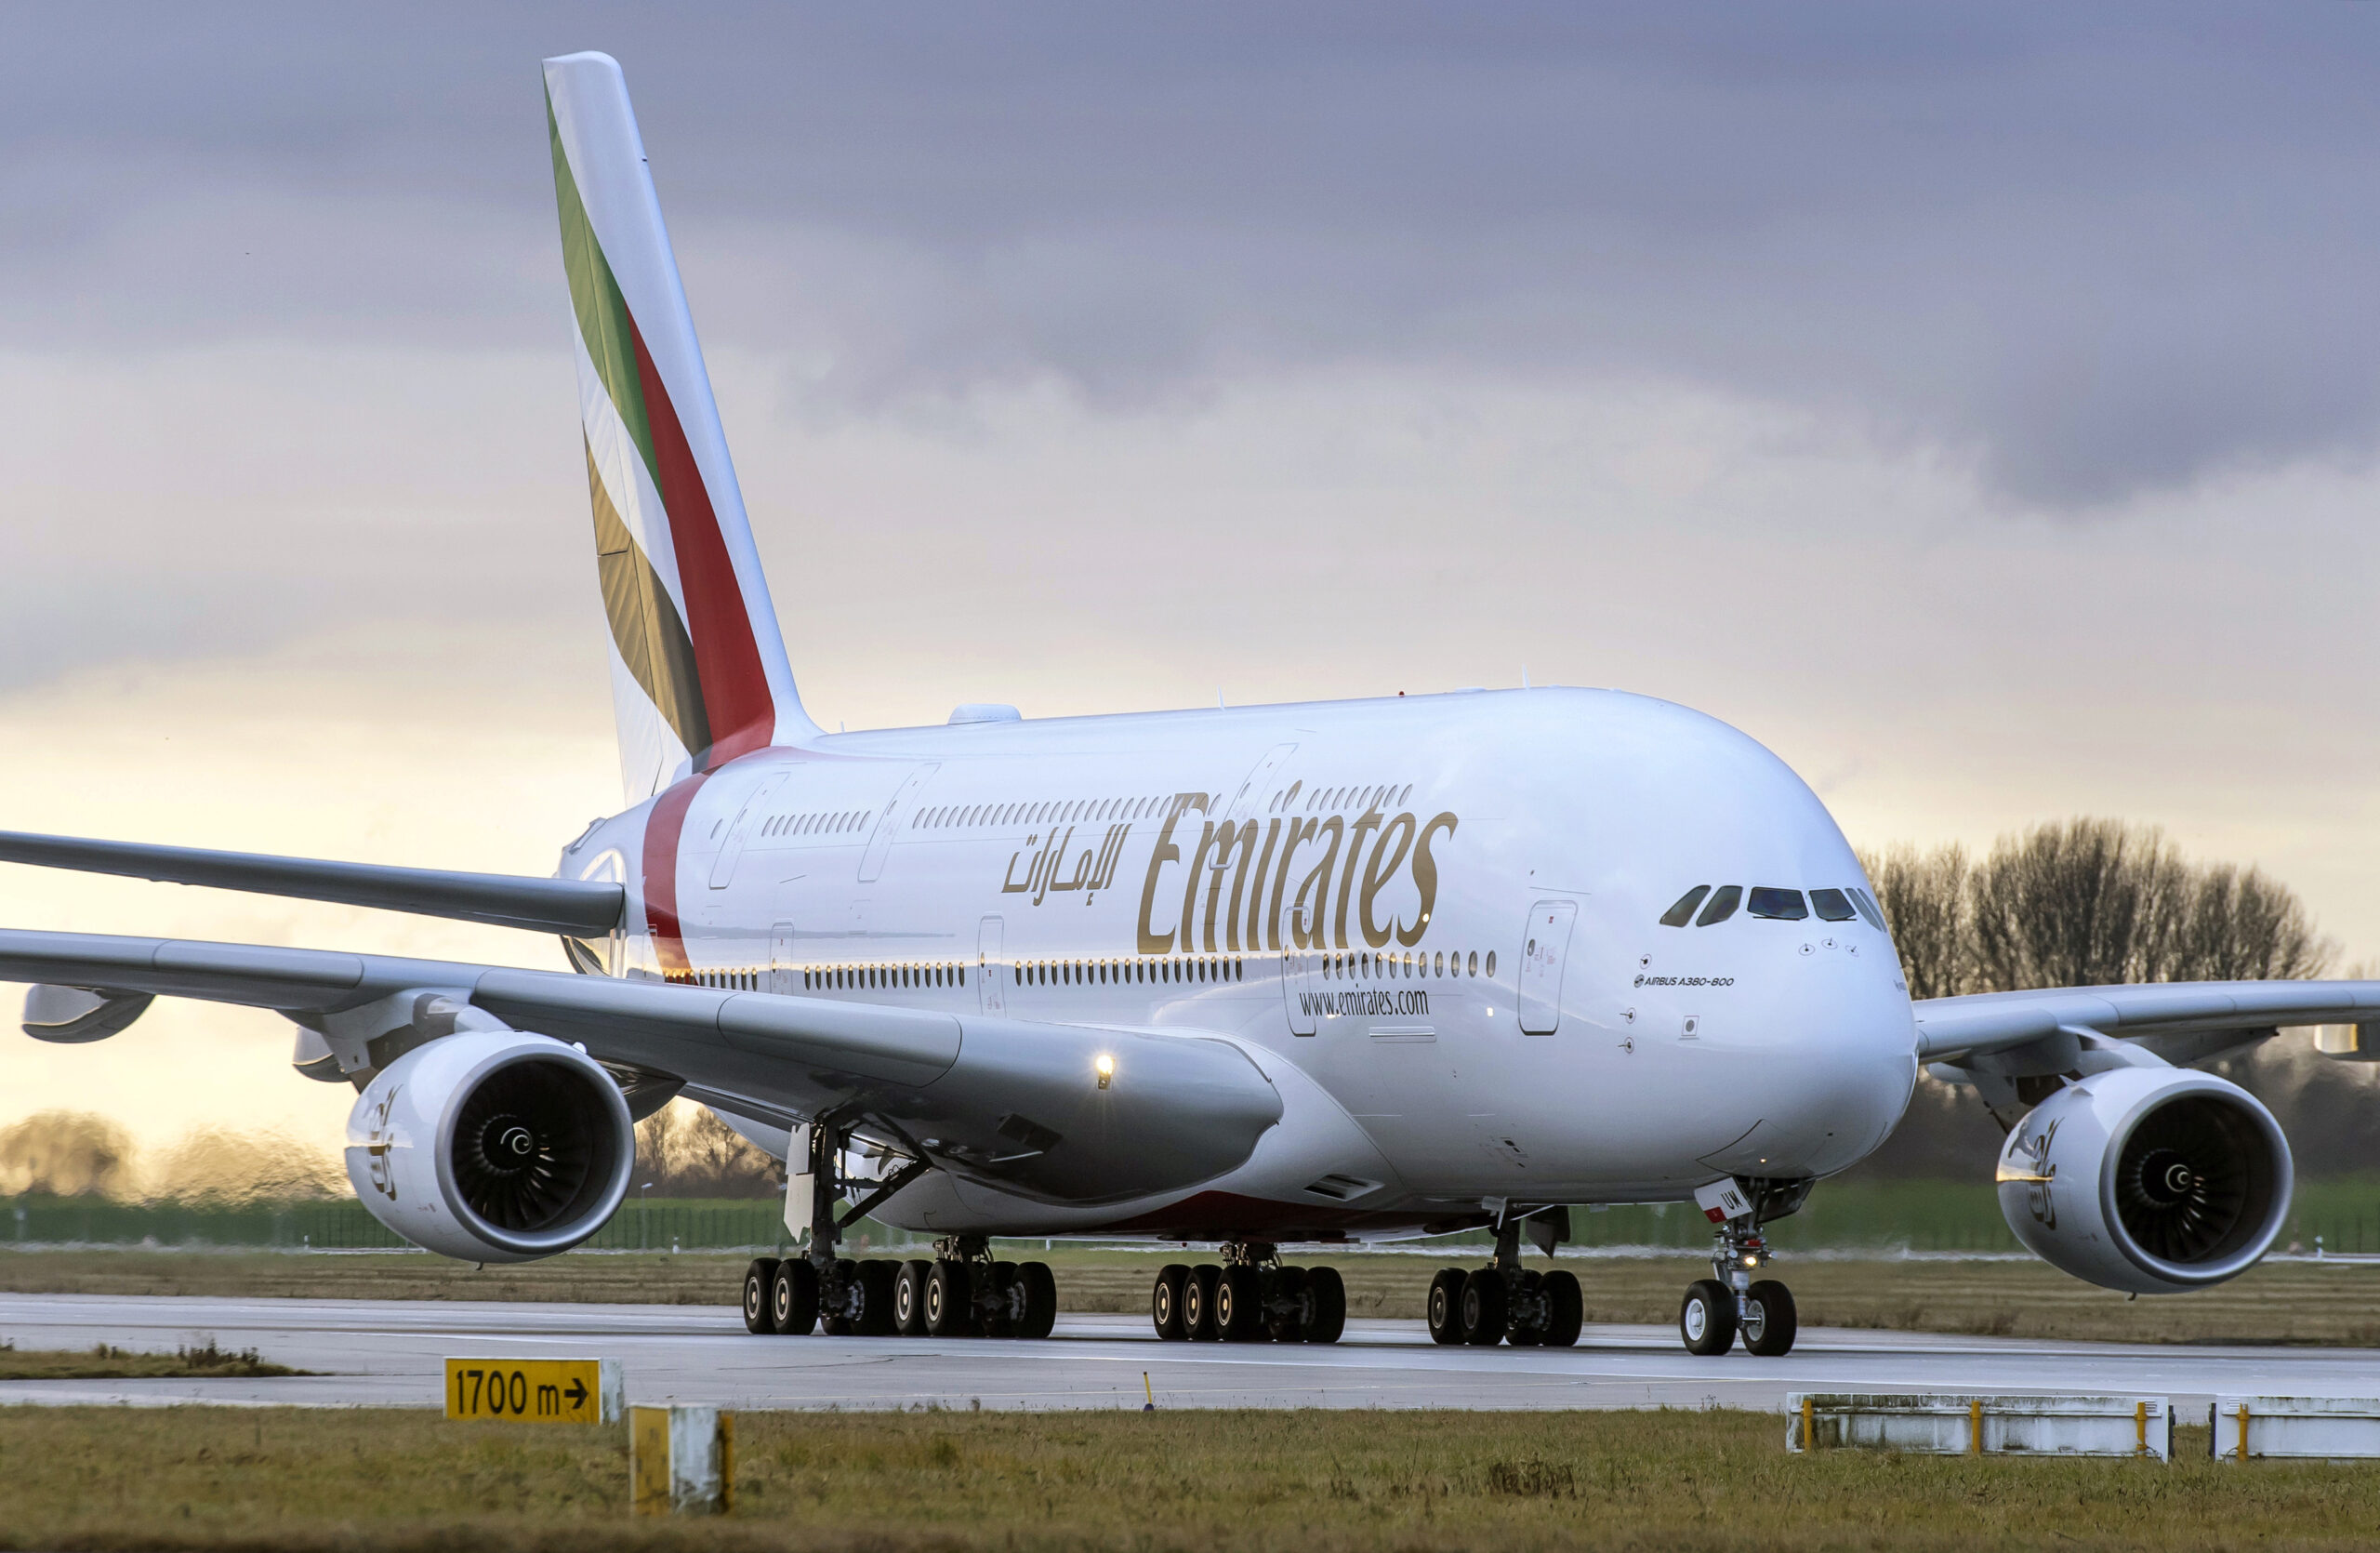 Emirates Flight Suspensions Spark Hope For Australian Arrival Caps Boycott